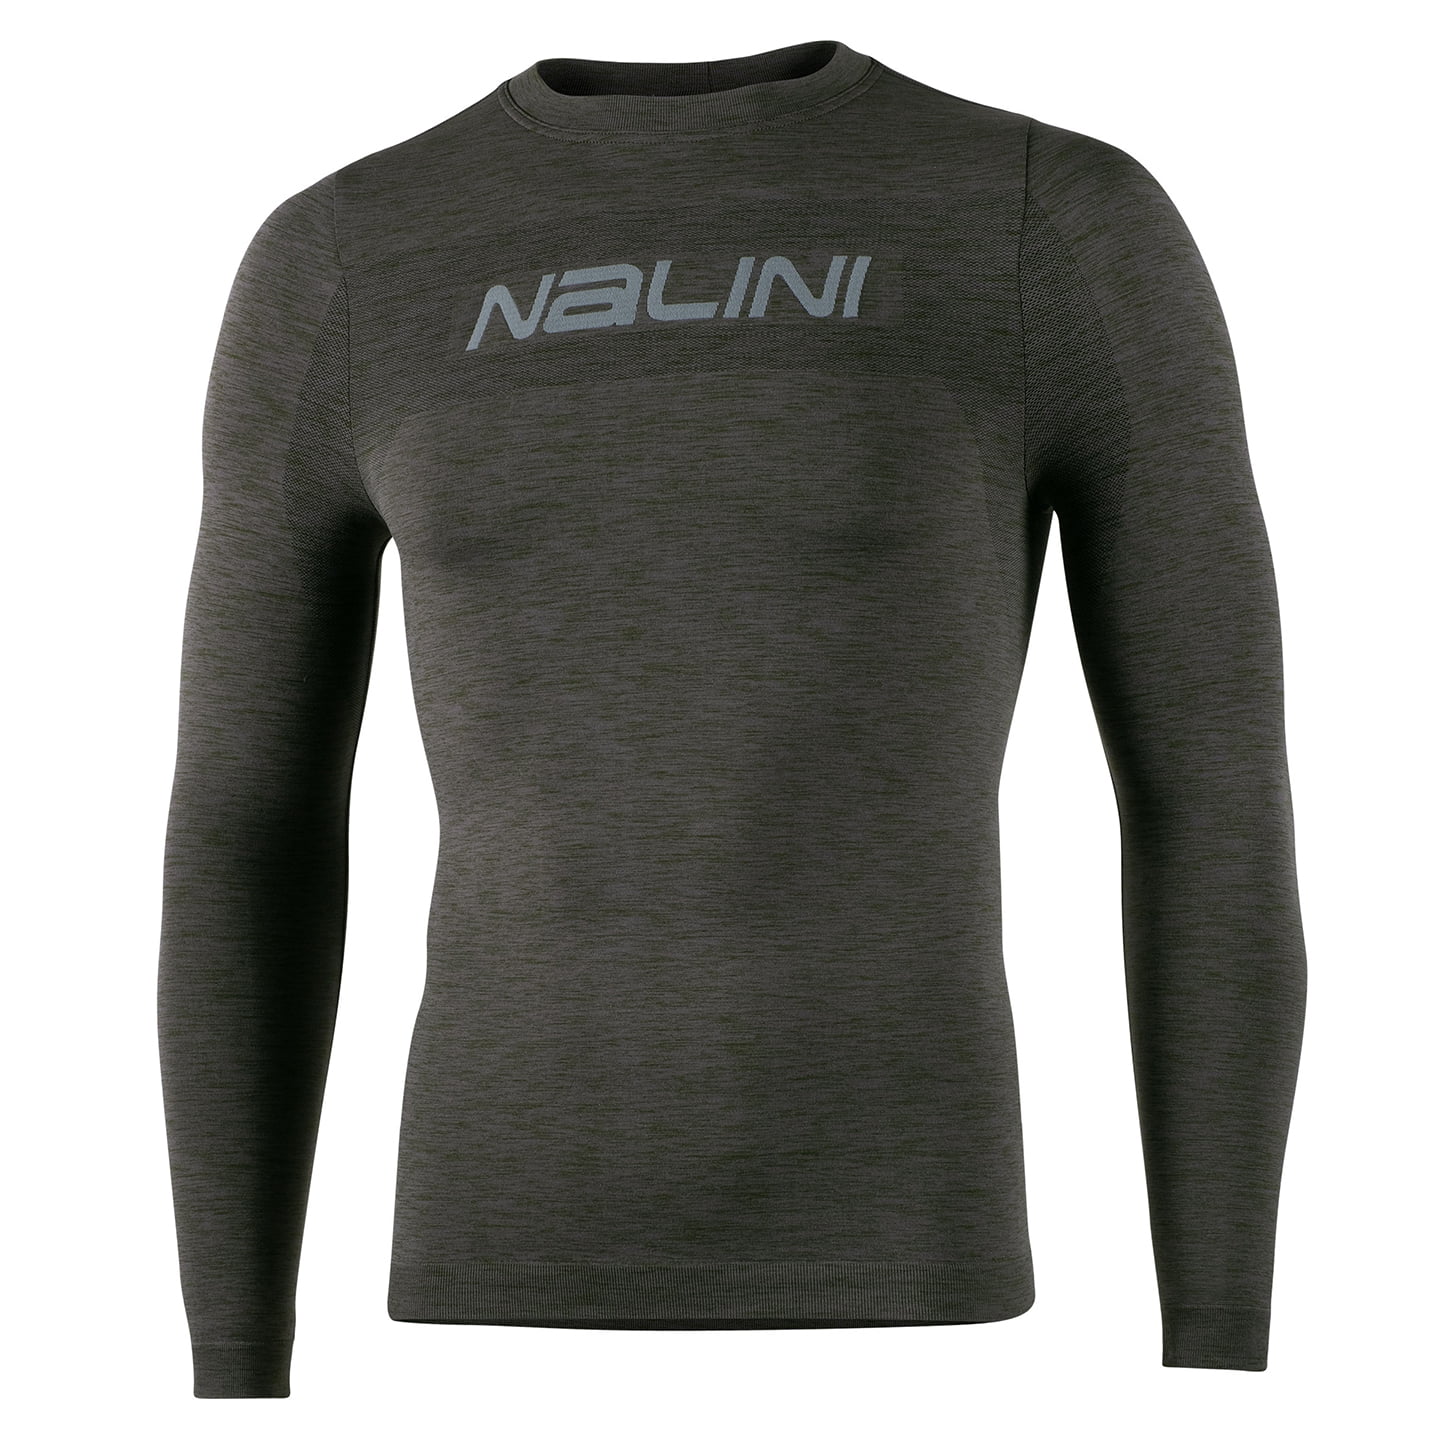 NALINI Melange Long Sleeve Cycling Base Layer Base Layer, for men, size 2XL